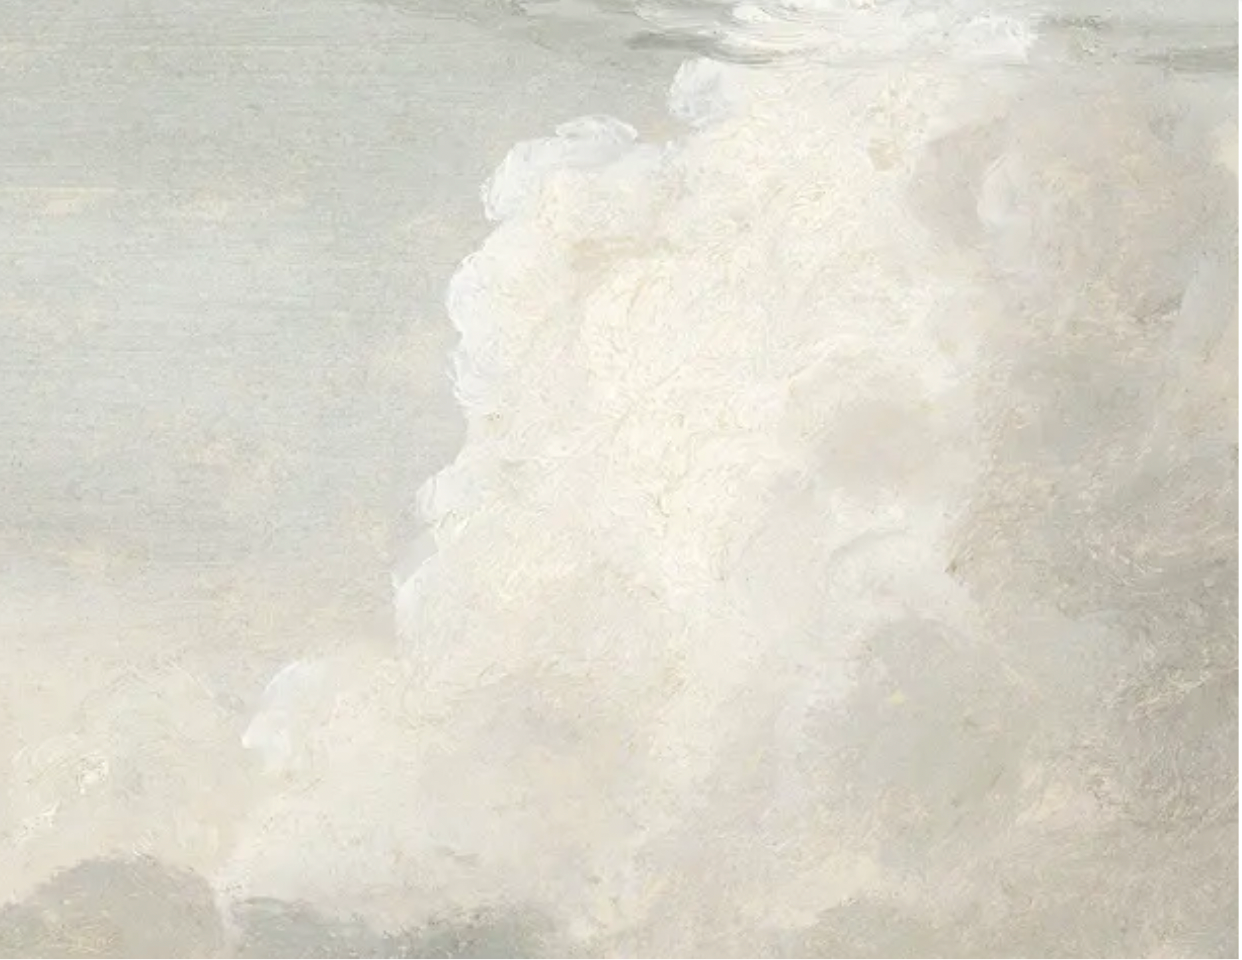 Clouds C.1838 Art Prints